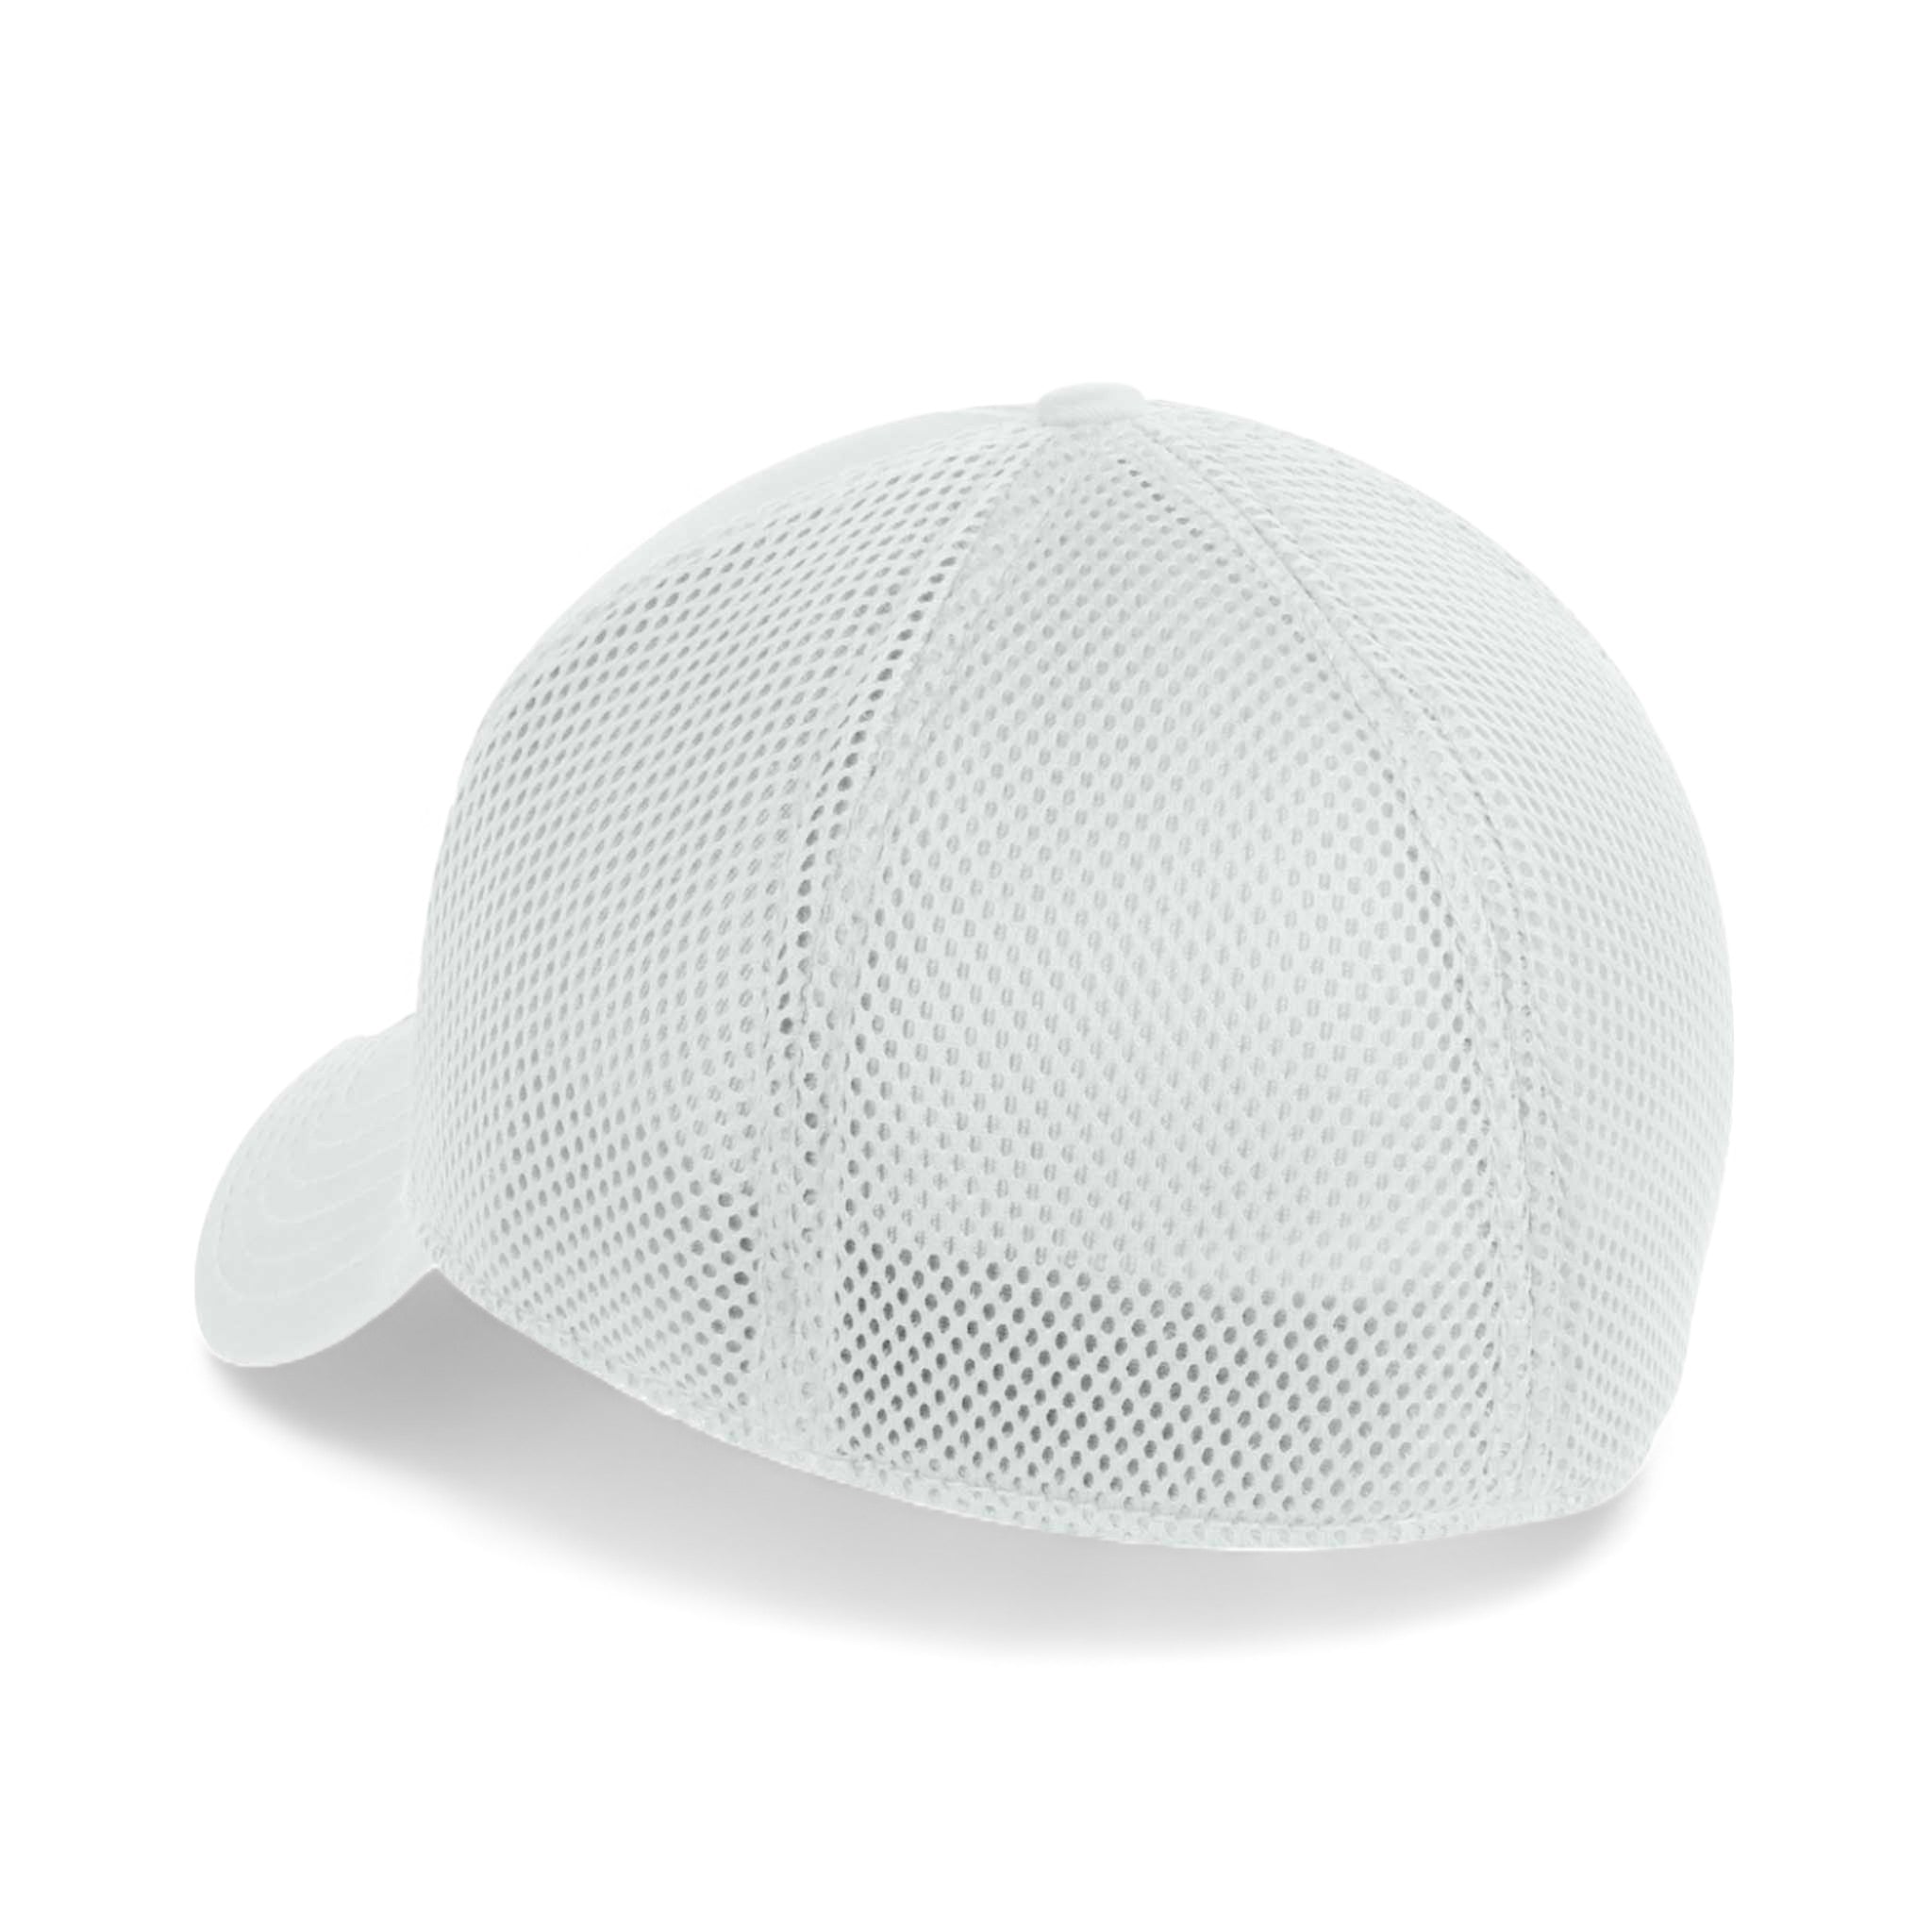 Back view of New Era NE1020 custom hat in white